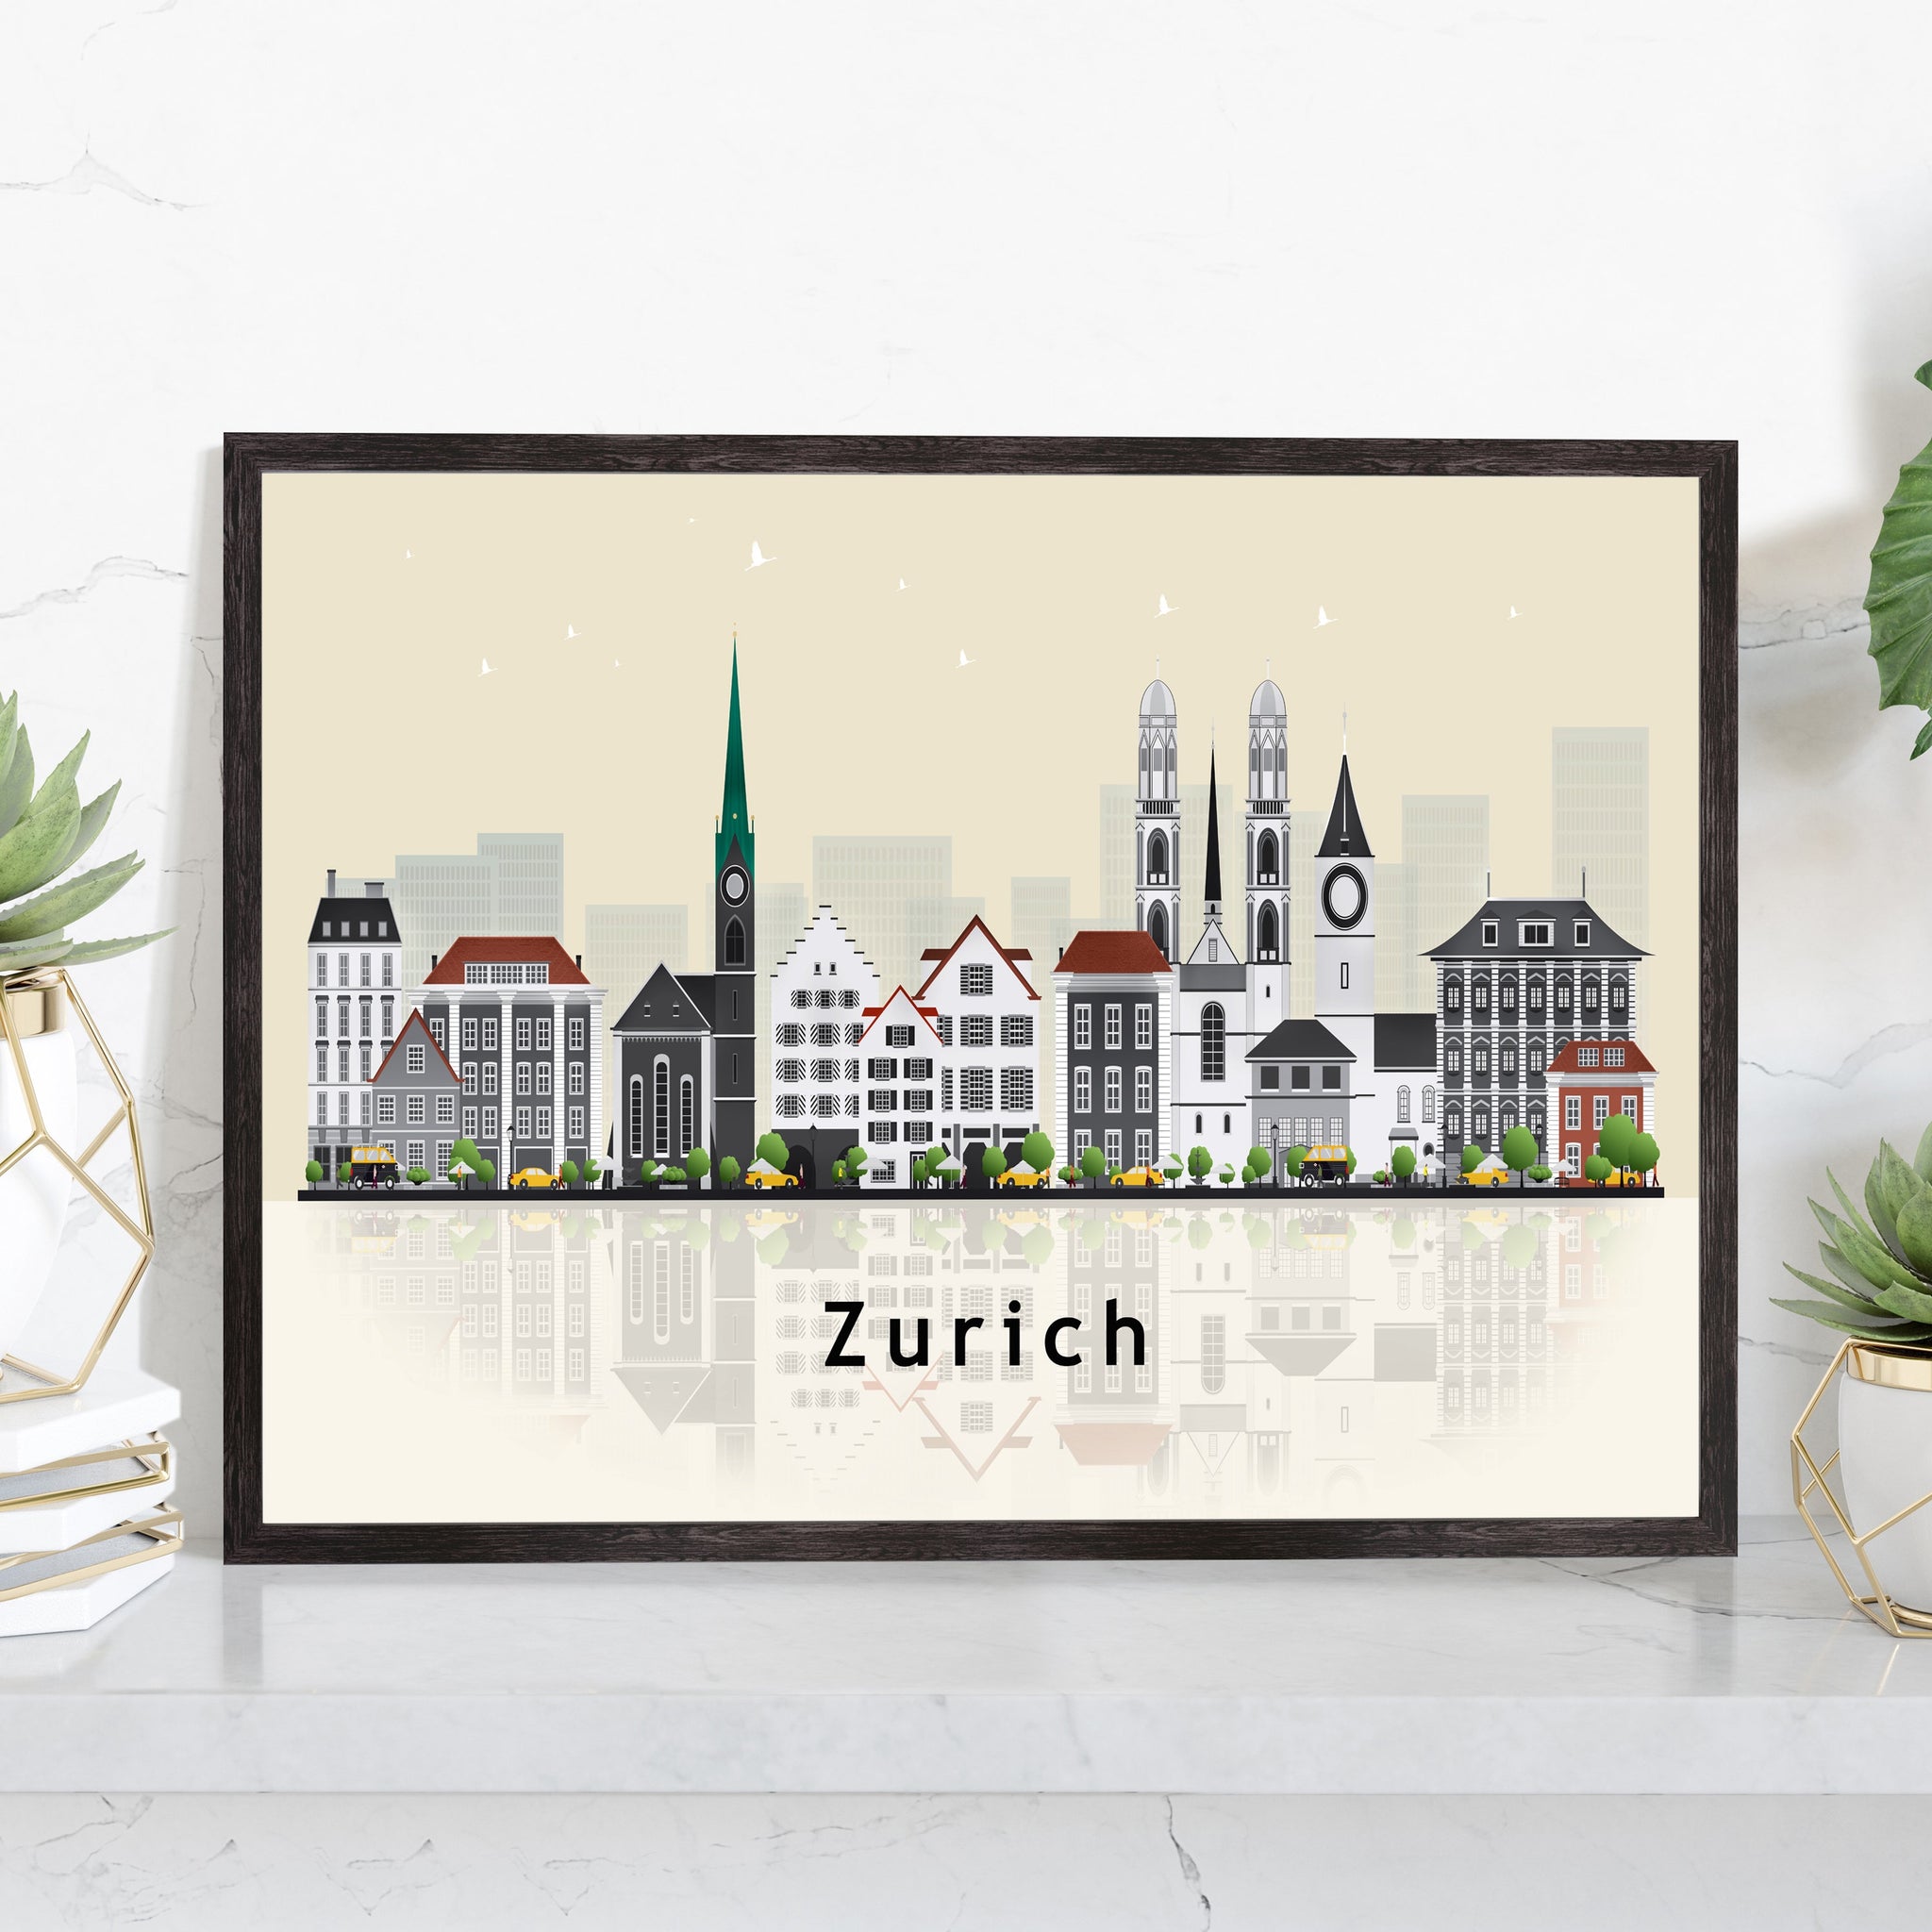 ZURICH SWITZERLAND Illustration skyline poster, Modern skyline cityscape poster print, Landmark map poster, Home wall art decoration